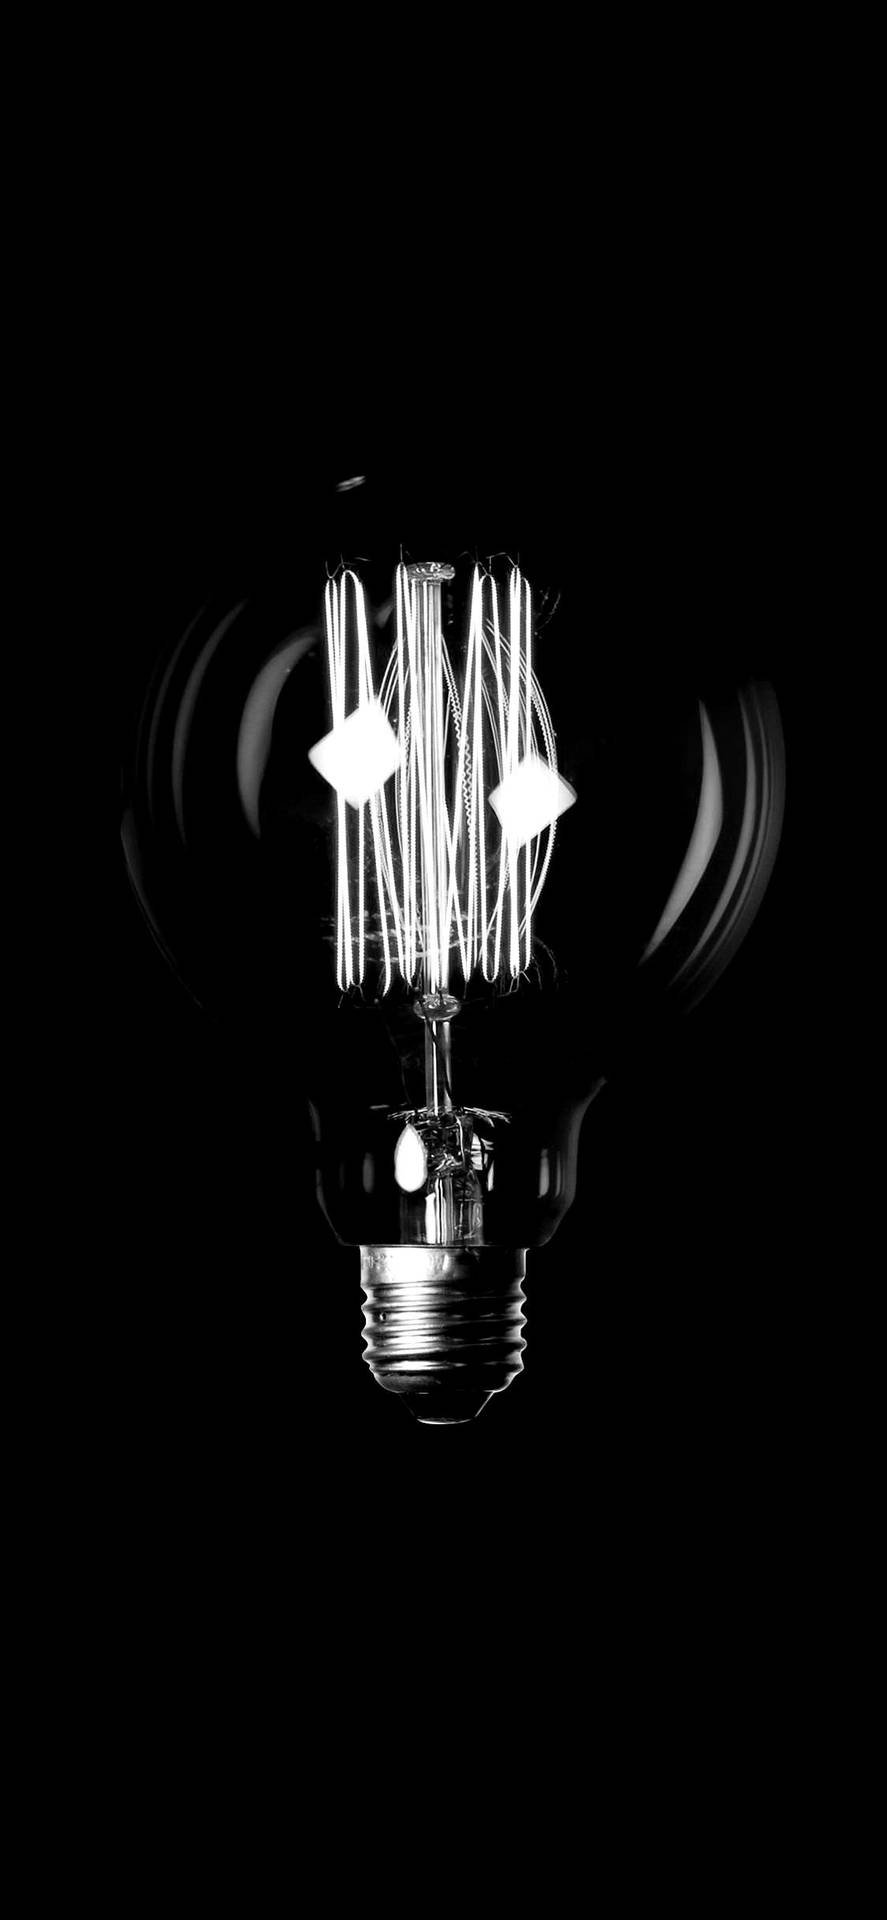 Highlighting Intelligence - A Monochrome Bulb Illustration Background